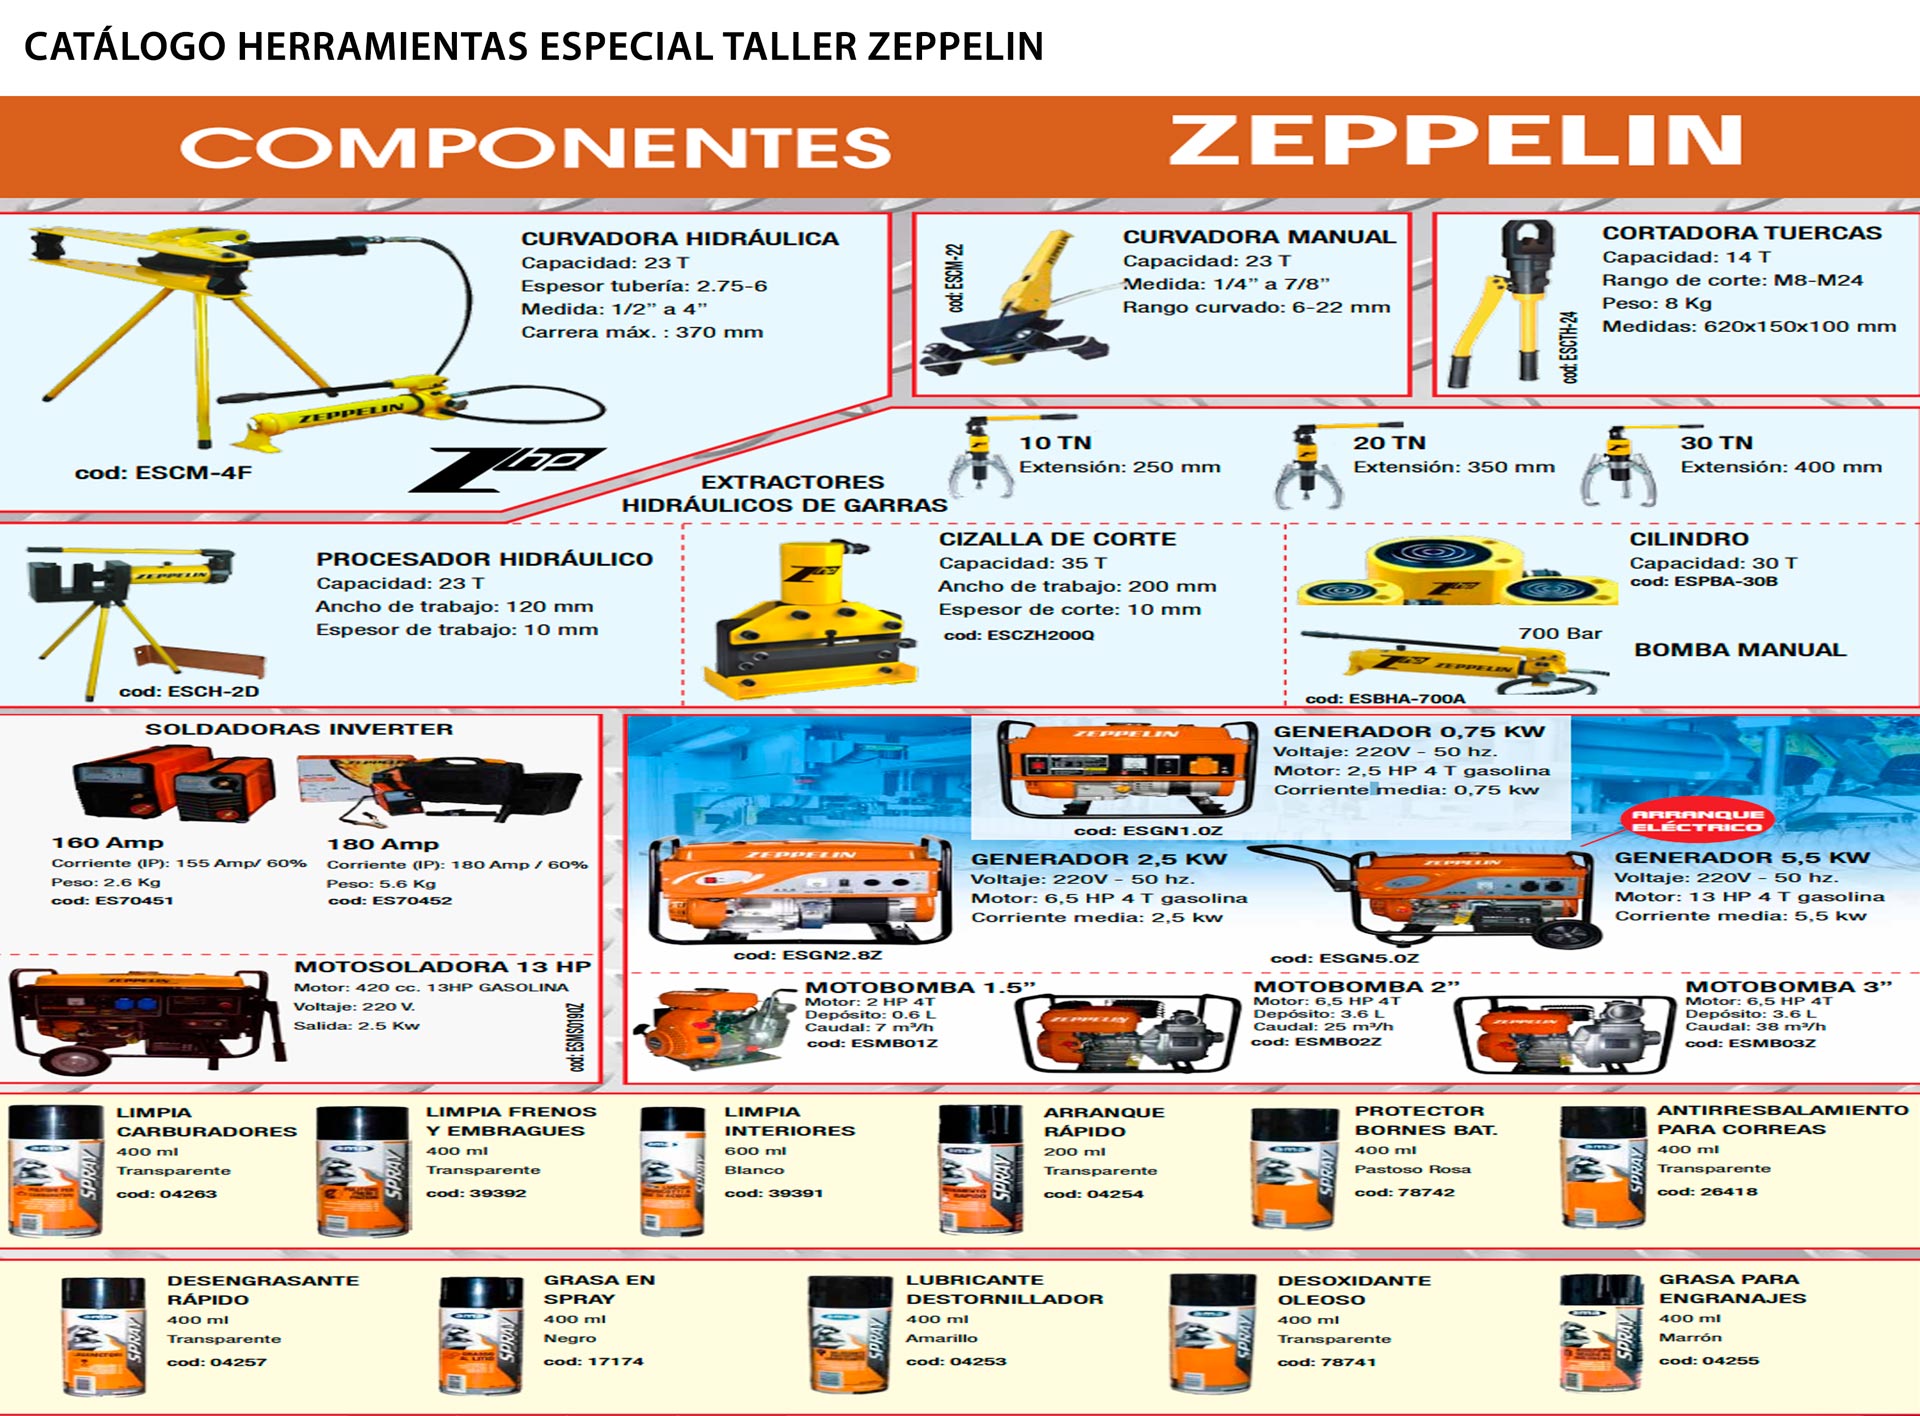 componentes-zeppelin-2-1920